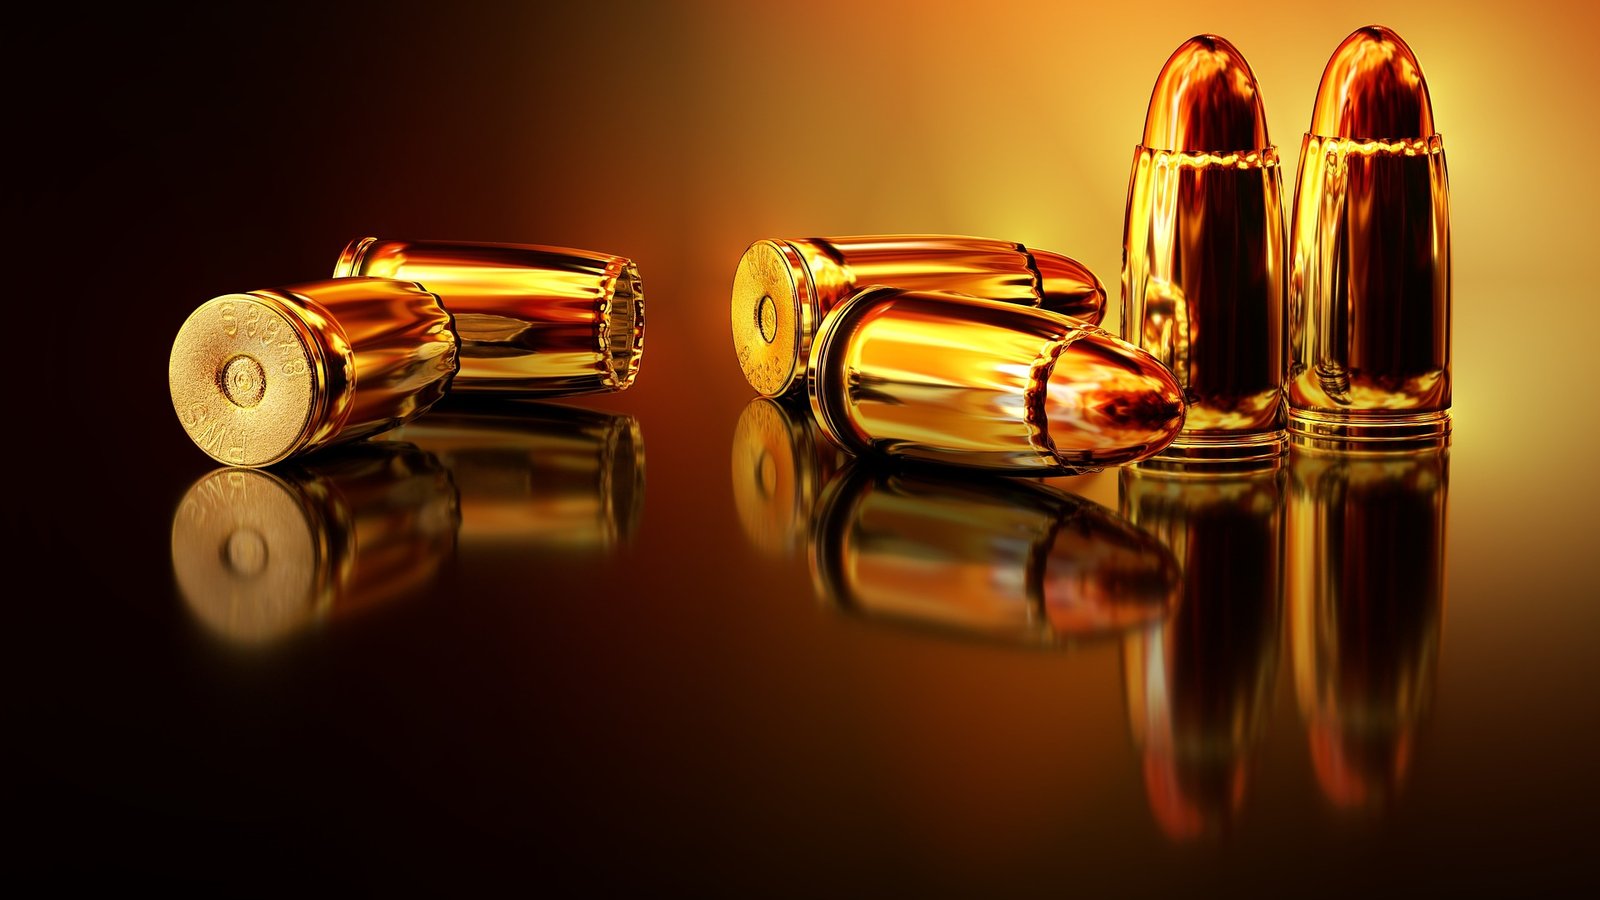 bullets 2166491 1920